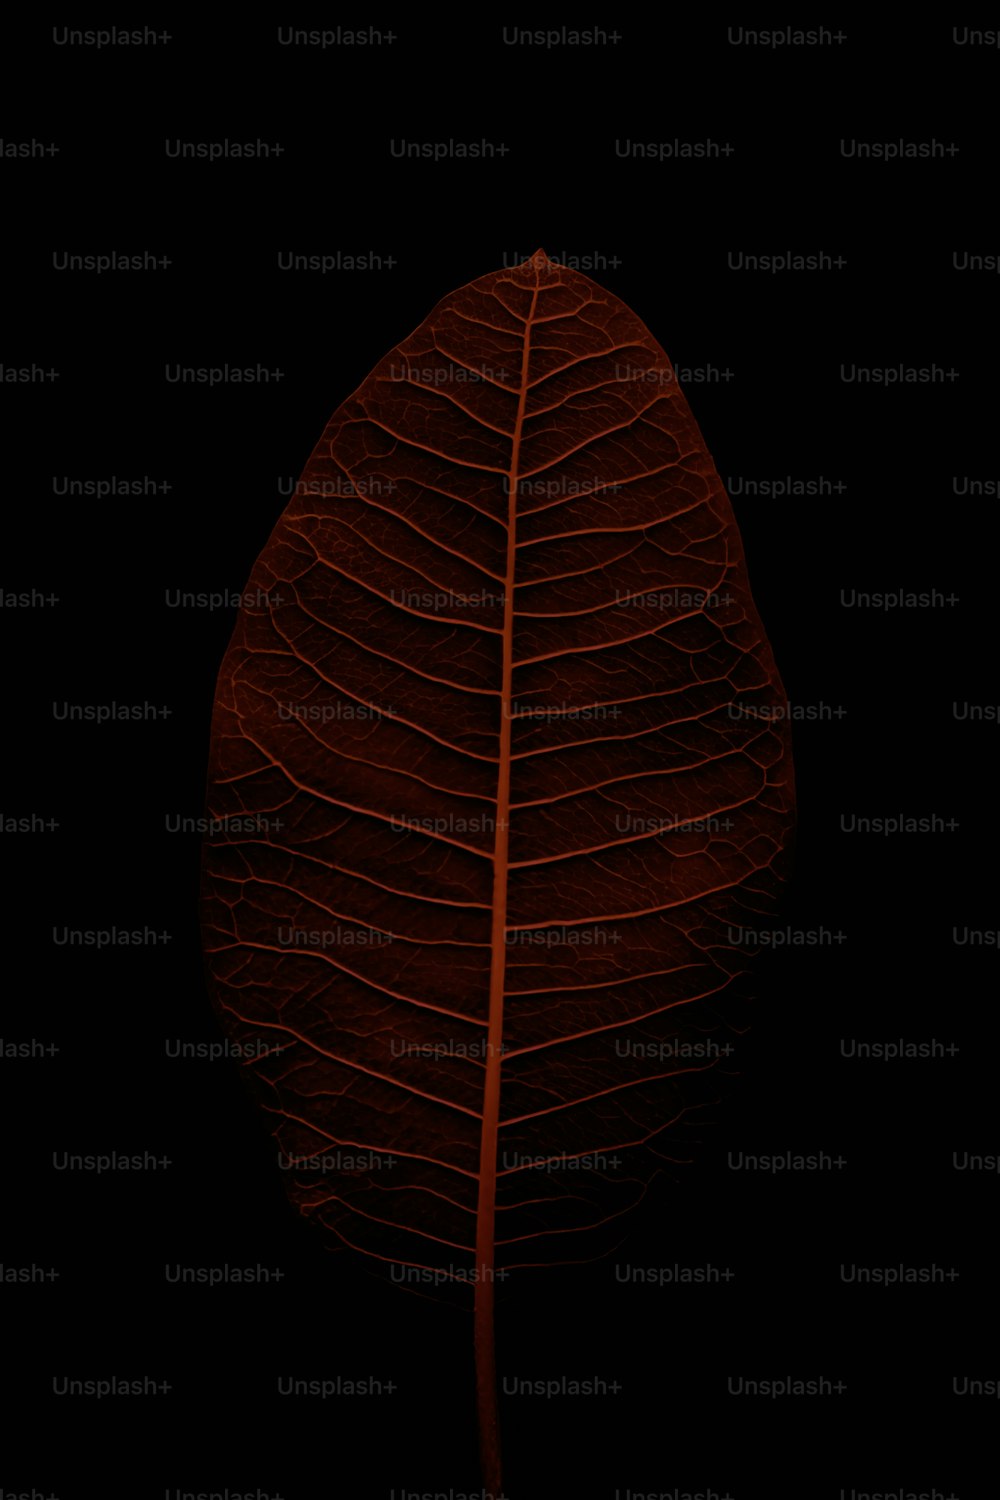 a red leaf on a black background